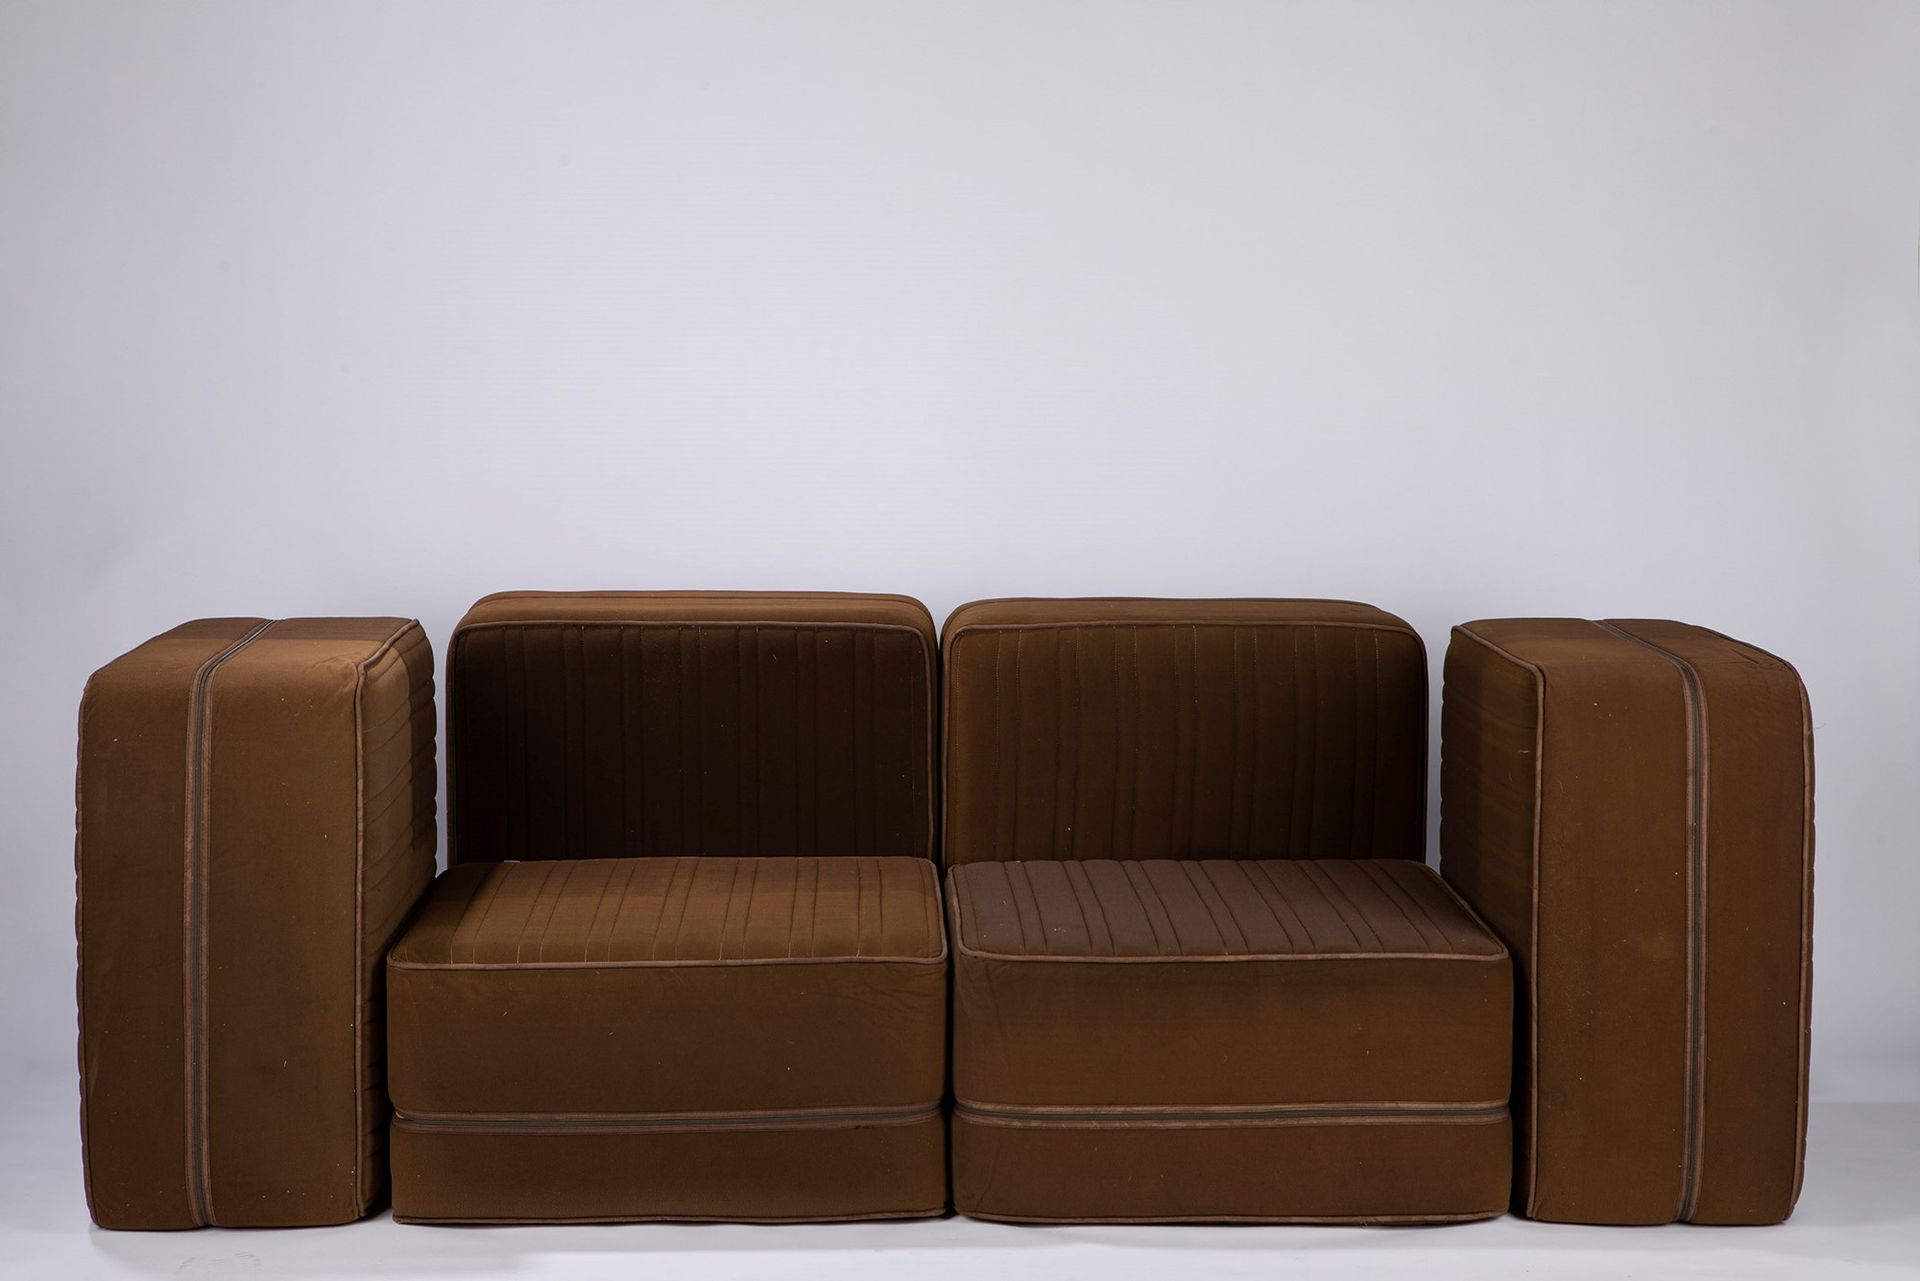 Studio De Pas, D’Urbino, Lomazzi 模块沙发，1974年

H 30 x 63 x 63
型号Settebello由六个聚氨酯元素&hellip;